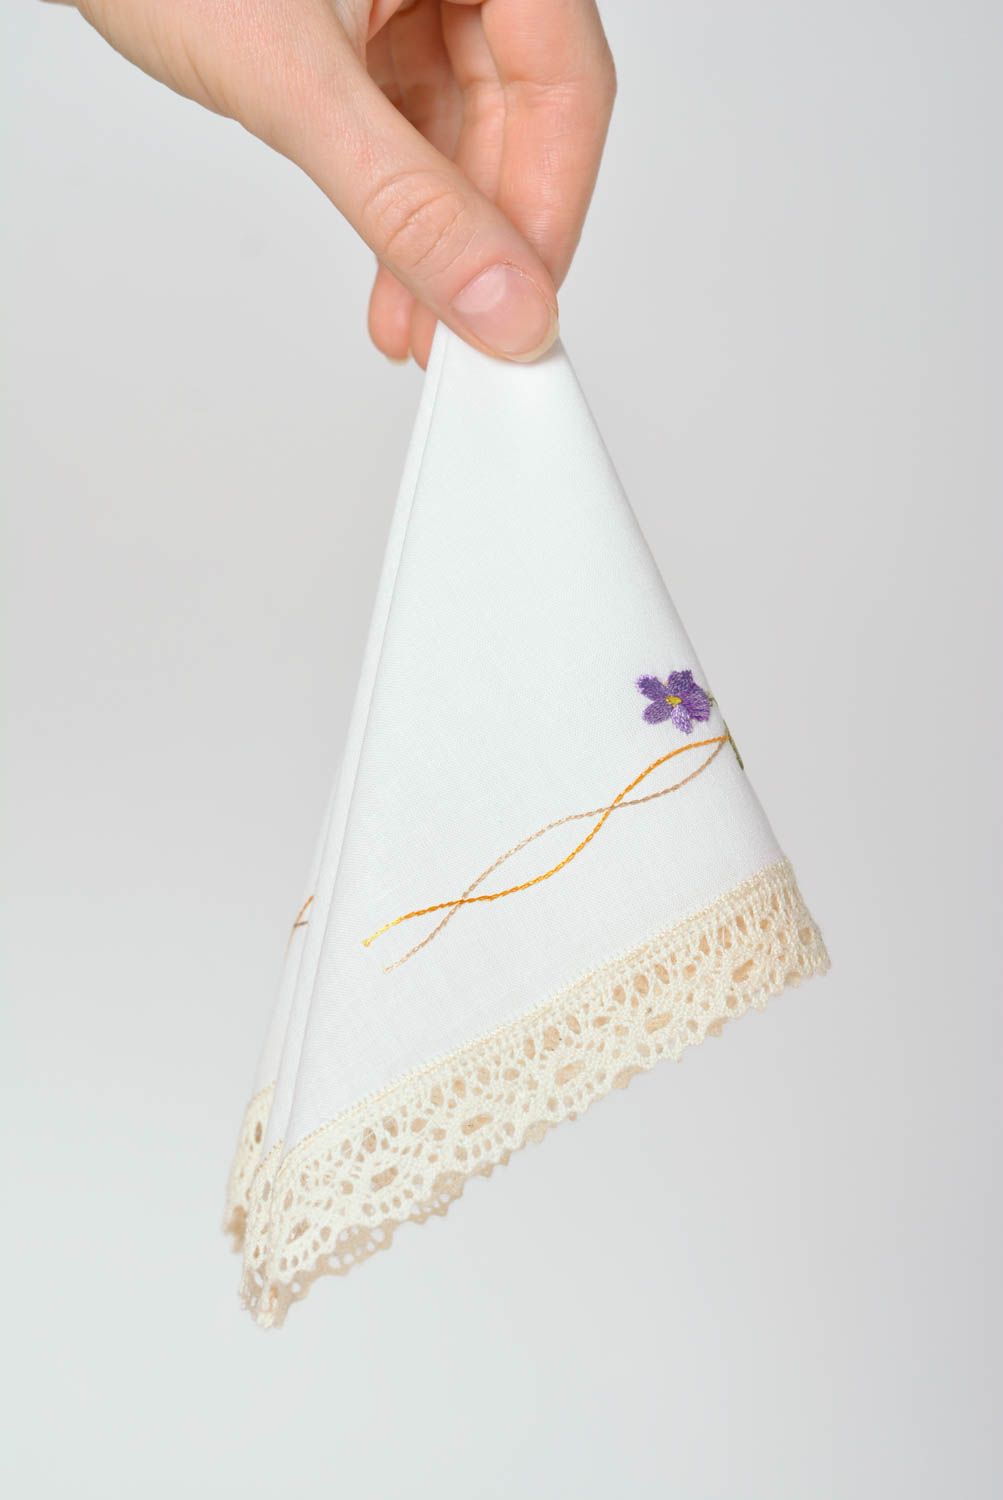 Handmade handkerchief designer handkerchief gift ideas lace handkerchief photo 3